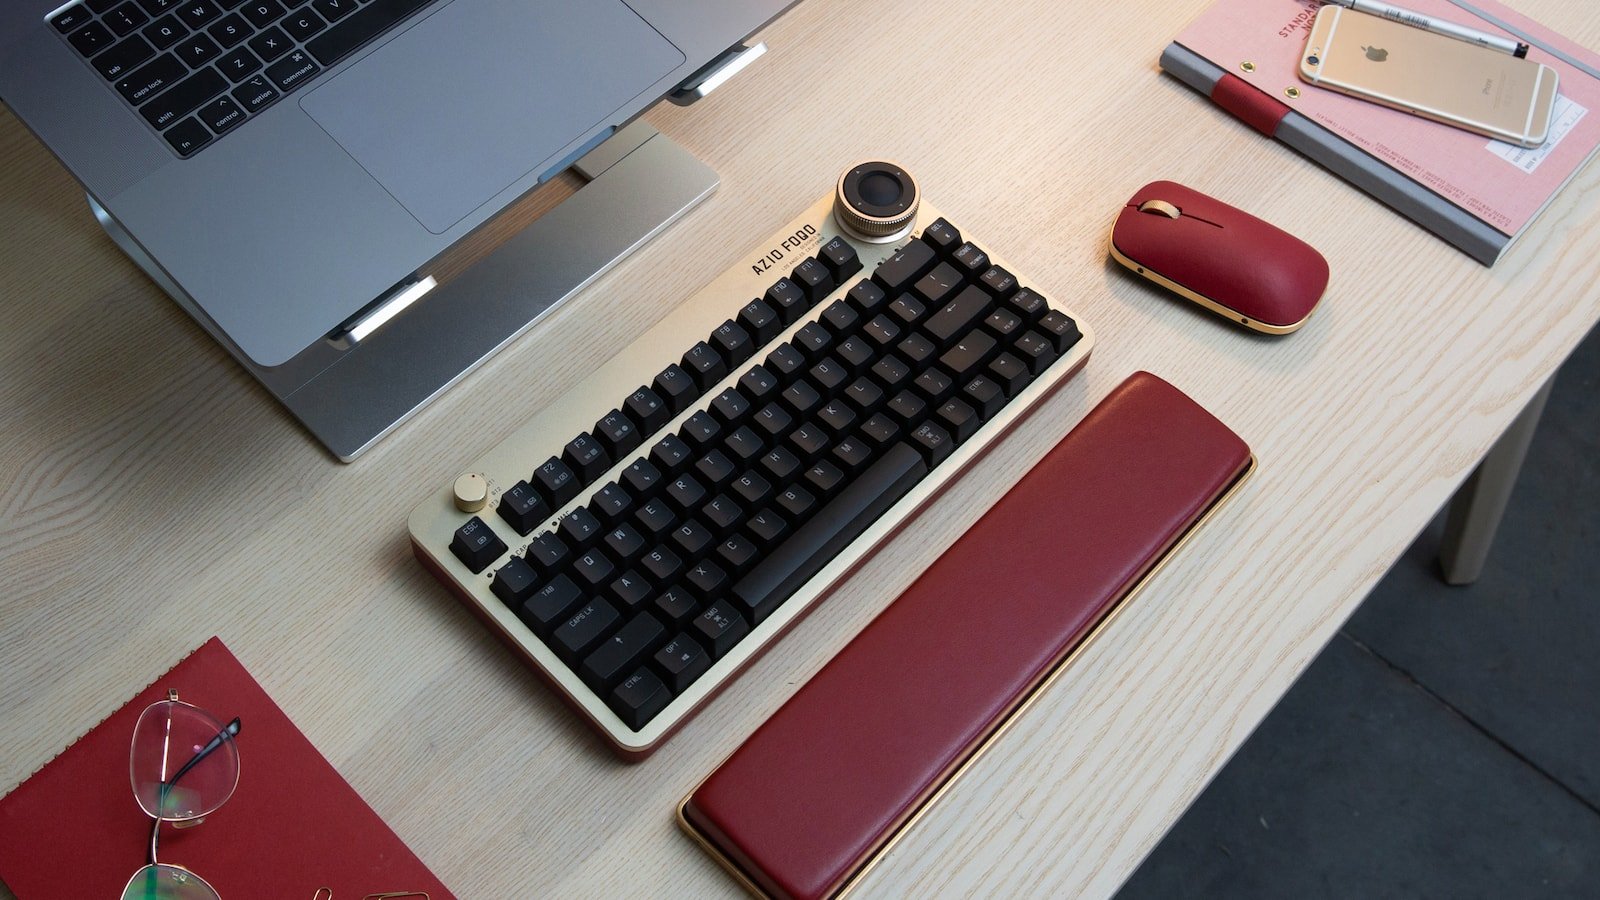 AZIO FOQO Wireless Keyboard has a design inspired by vintage range finder cameras